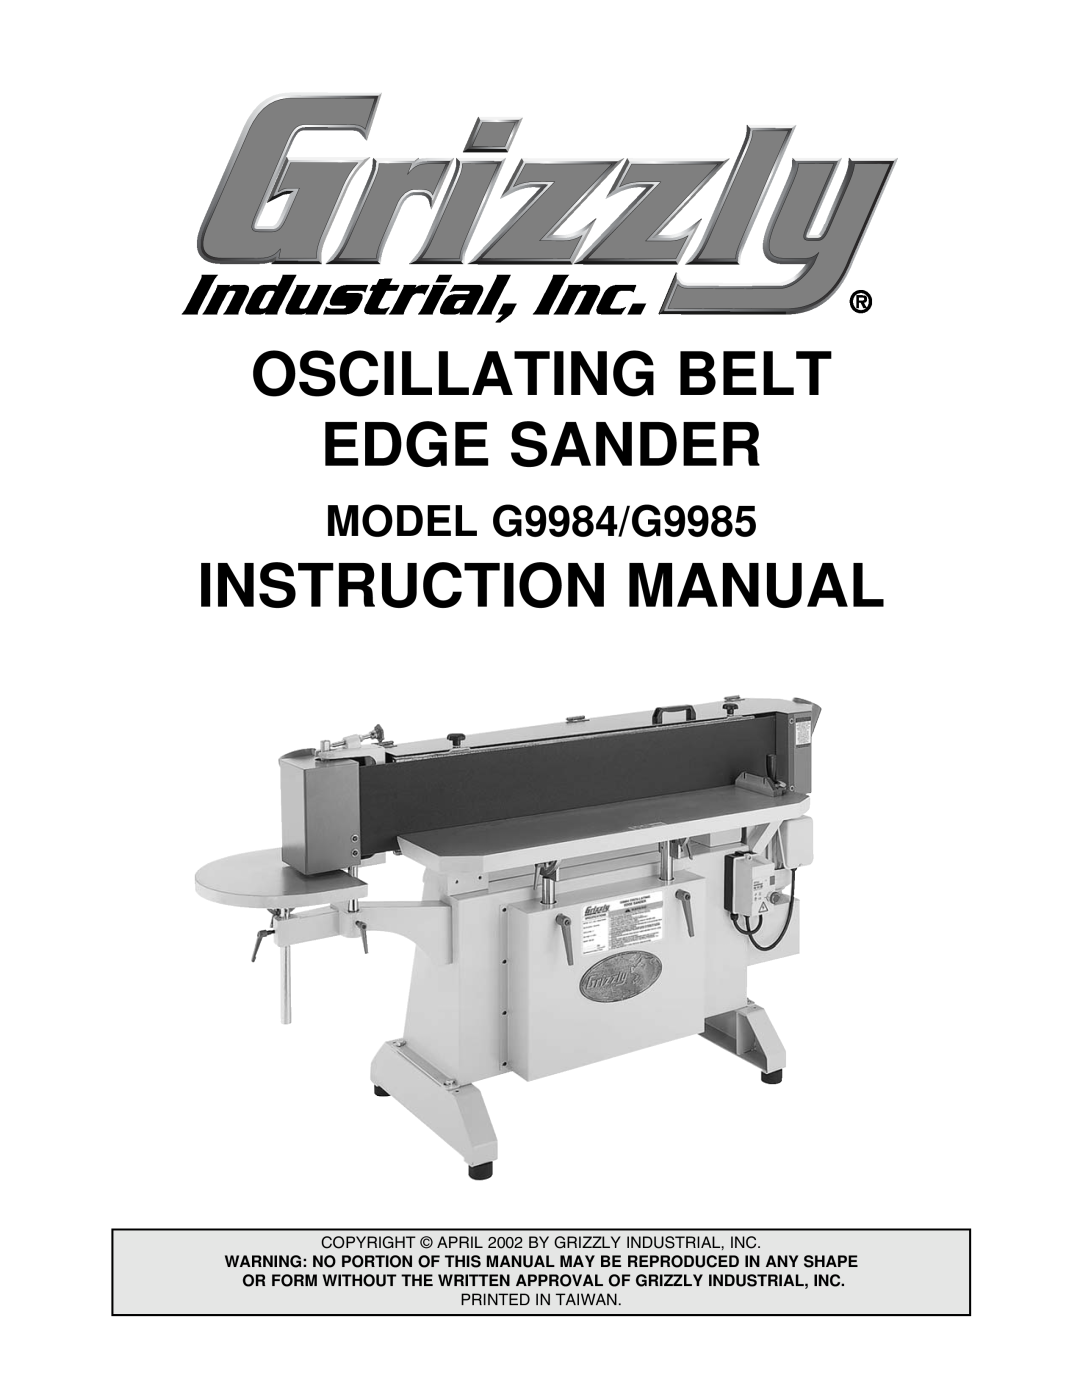 Grizzly instruction manual MODEL G9984/G9985, Oscillating Belt Edge Sander, Instruction Manual 